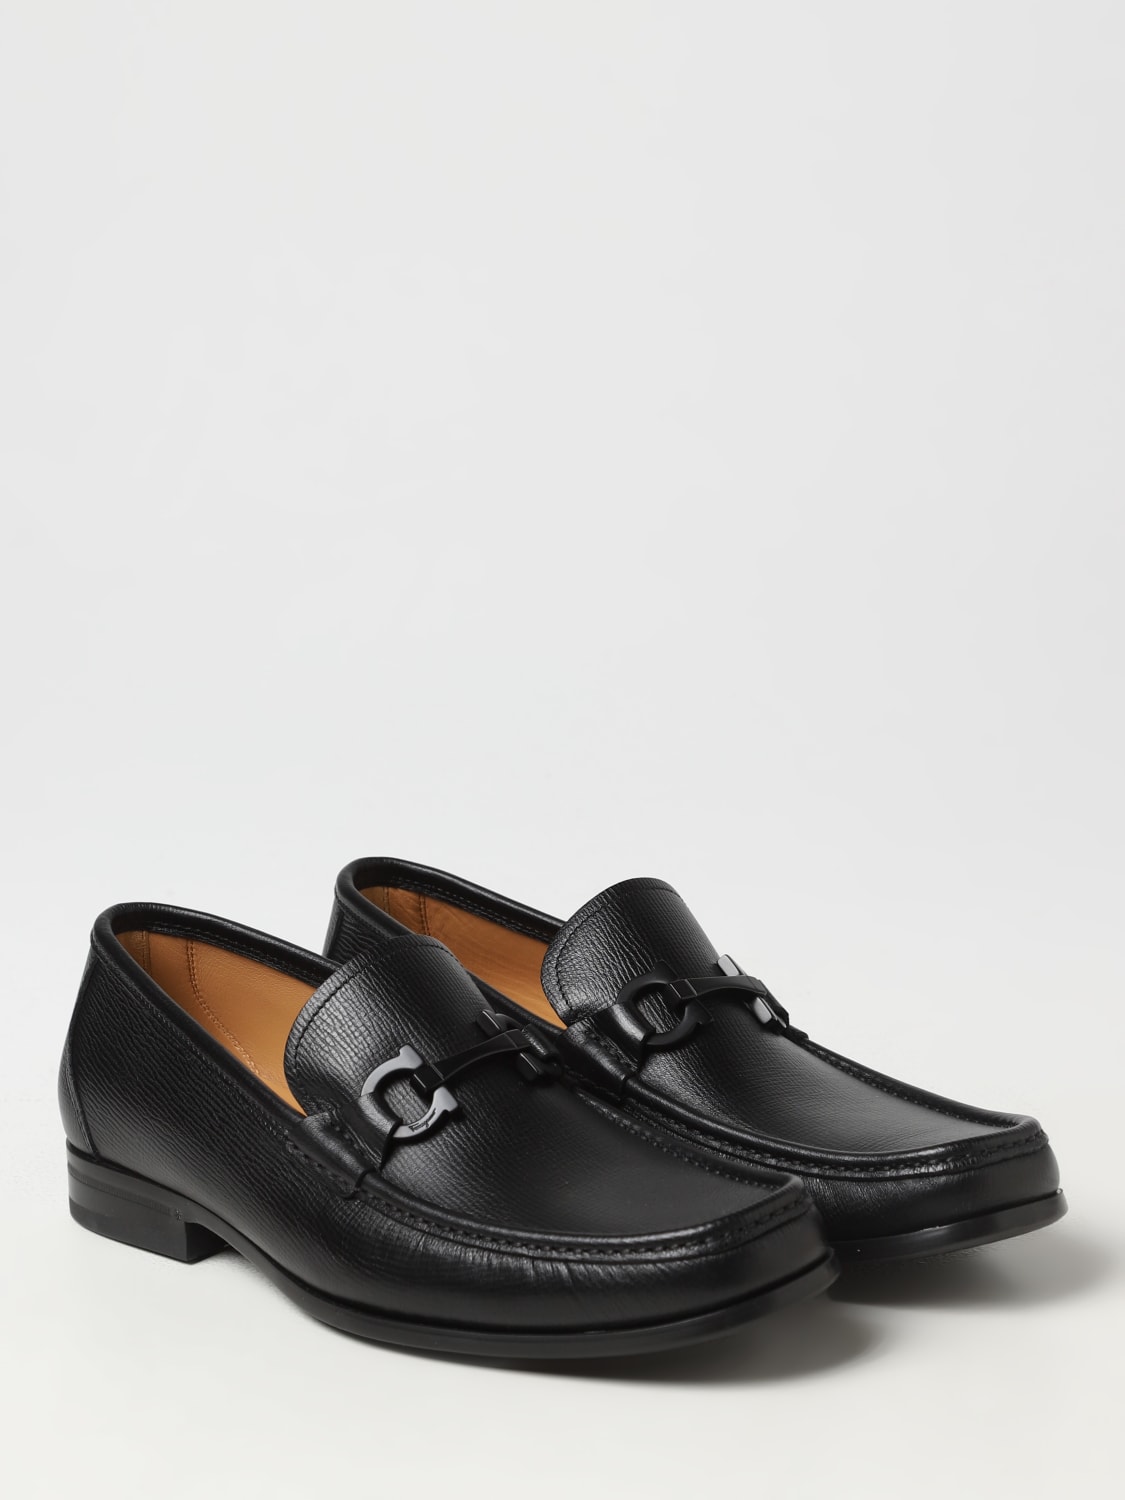 FERRAGAMO: leather loafers with horsebit - Black | Ferragamo loafers ...